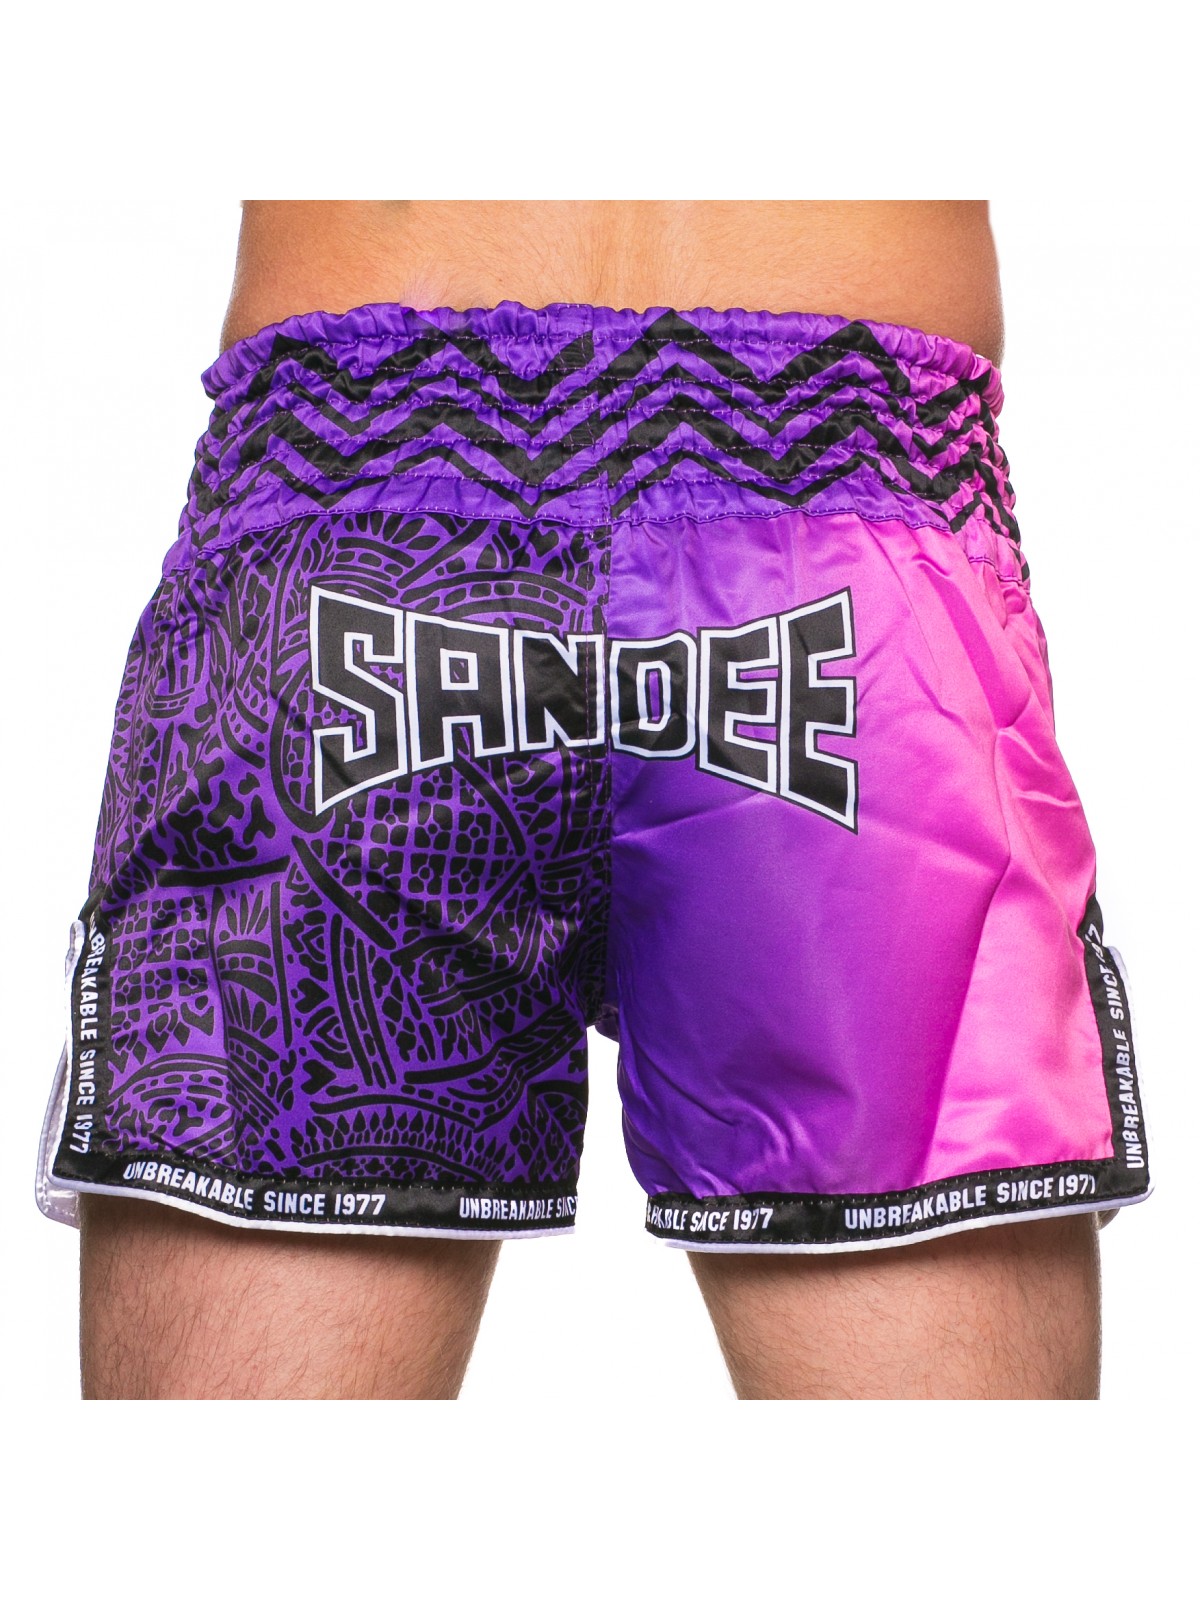 Thai Boxing, Kickboxing, MMA Sandee Muay Thai Shorts Warrior Purple & Pink 